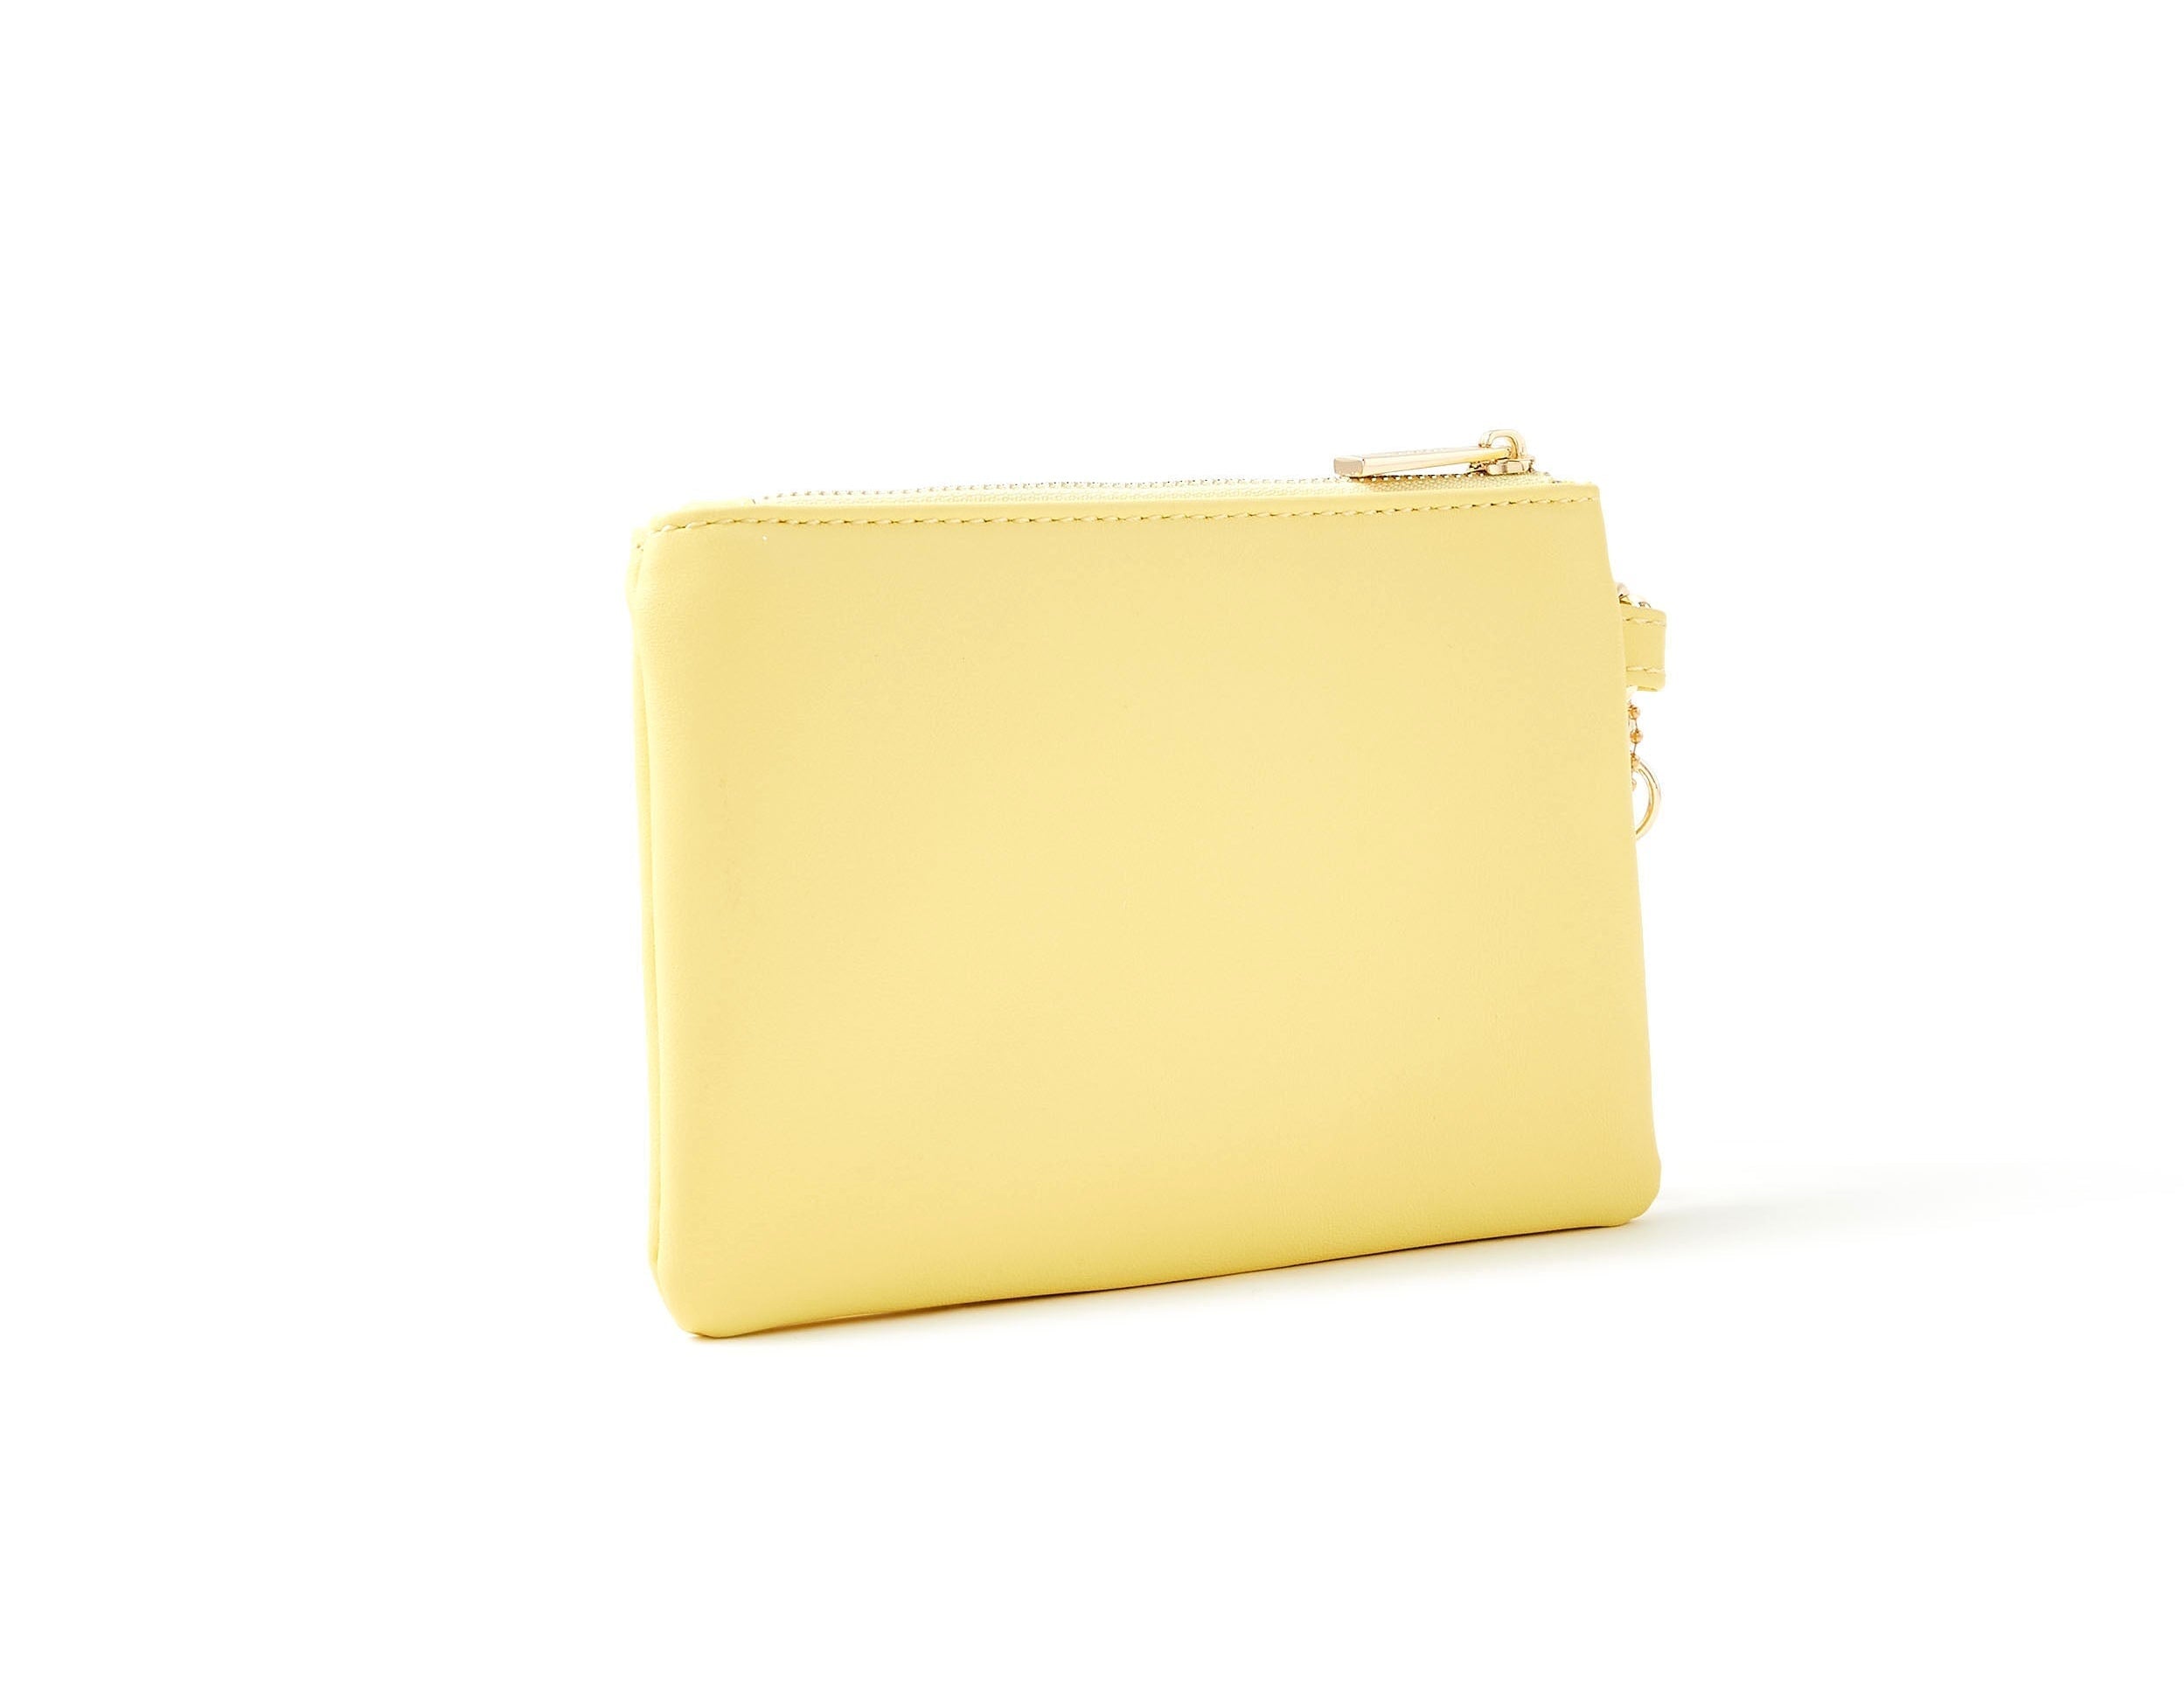 Accessorize London Women's Faux Leather Yellow Charm Wristlet Wallet